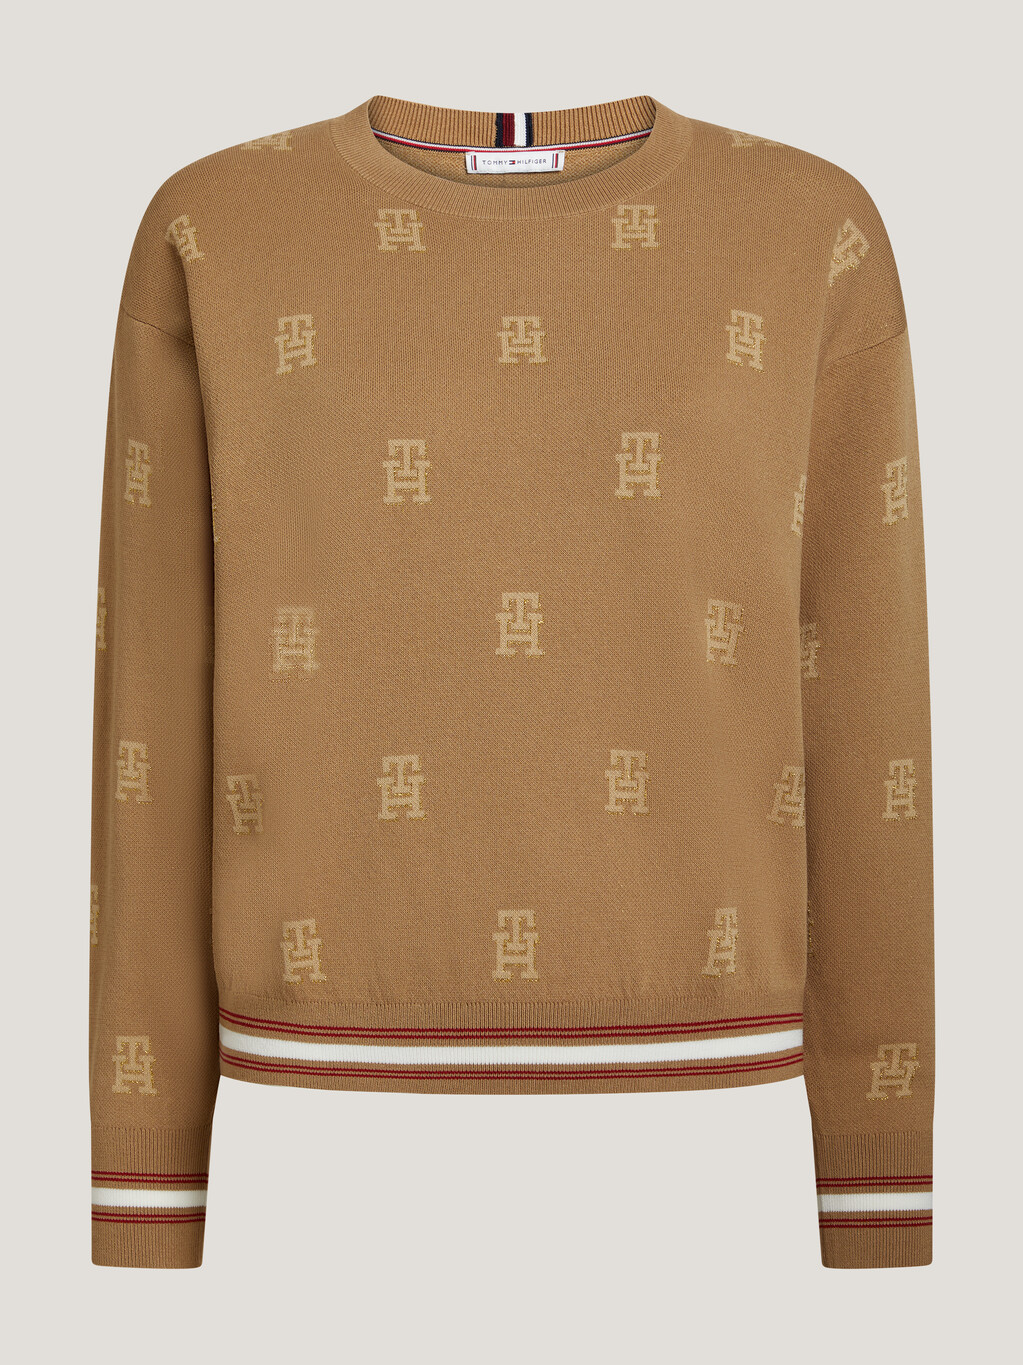 CNY TH Monogram Jacquard Sweater, Imd Aop Countryside Khaki, hi-res